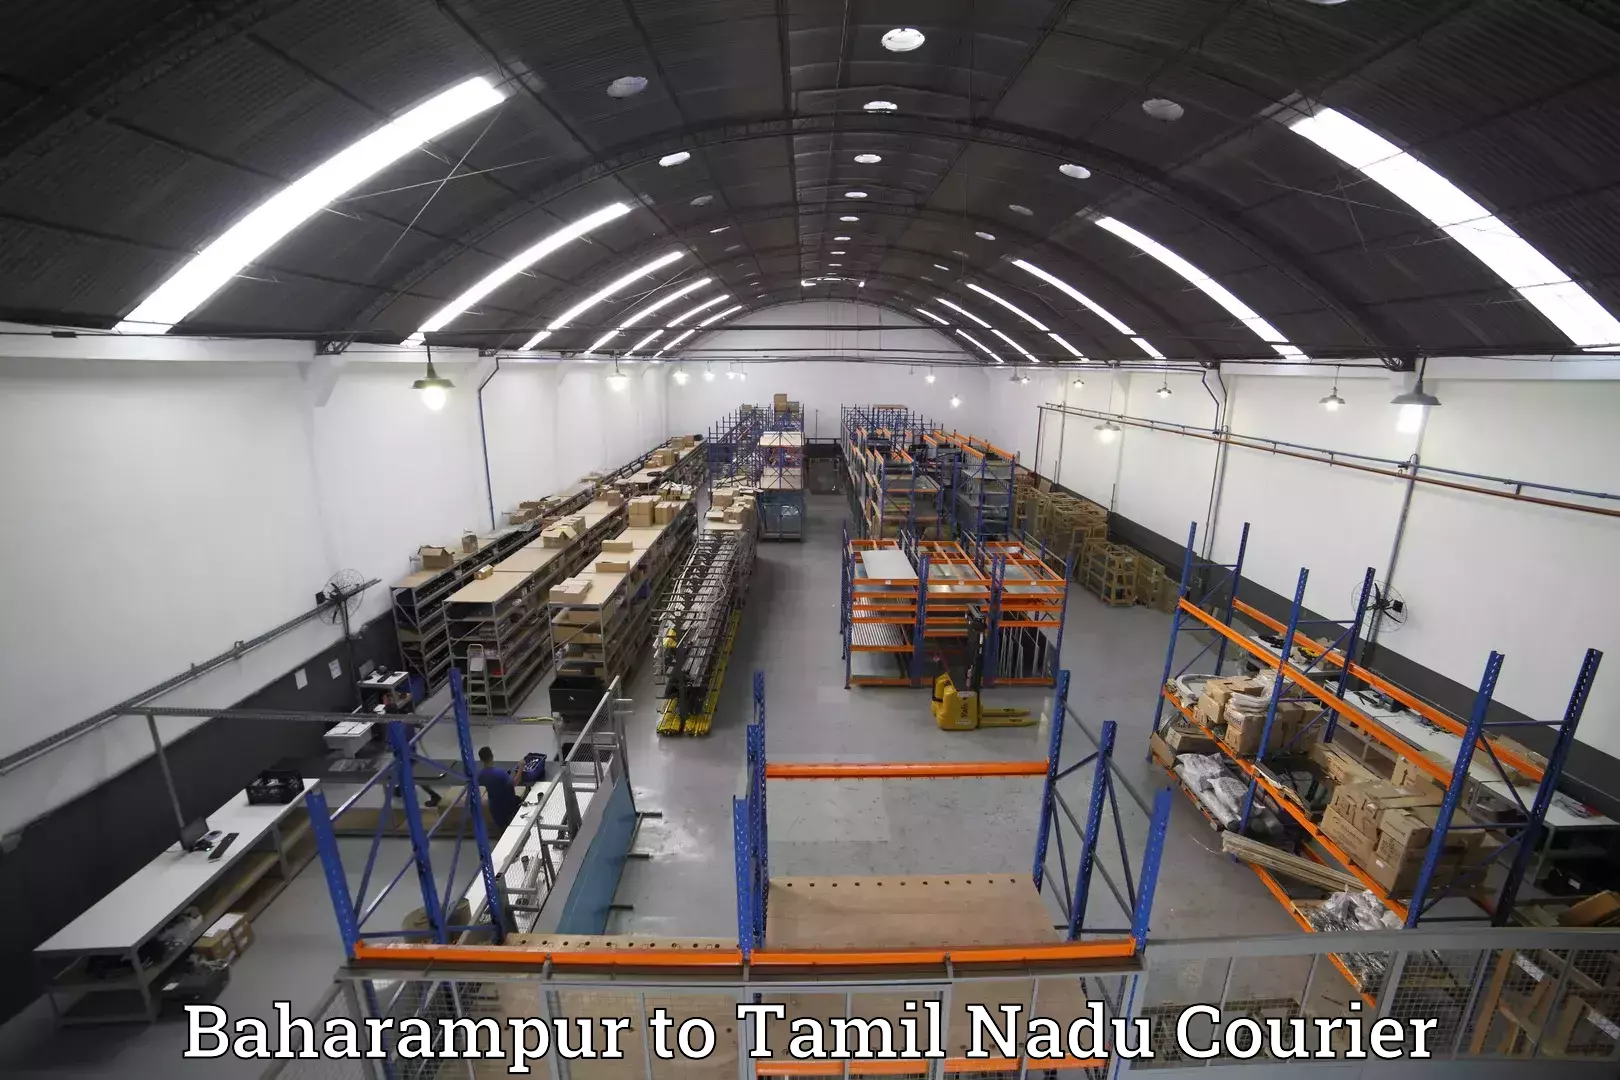 Baggage transport network Baharampur to Tamil Nadu